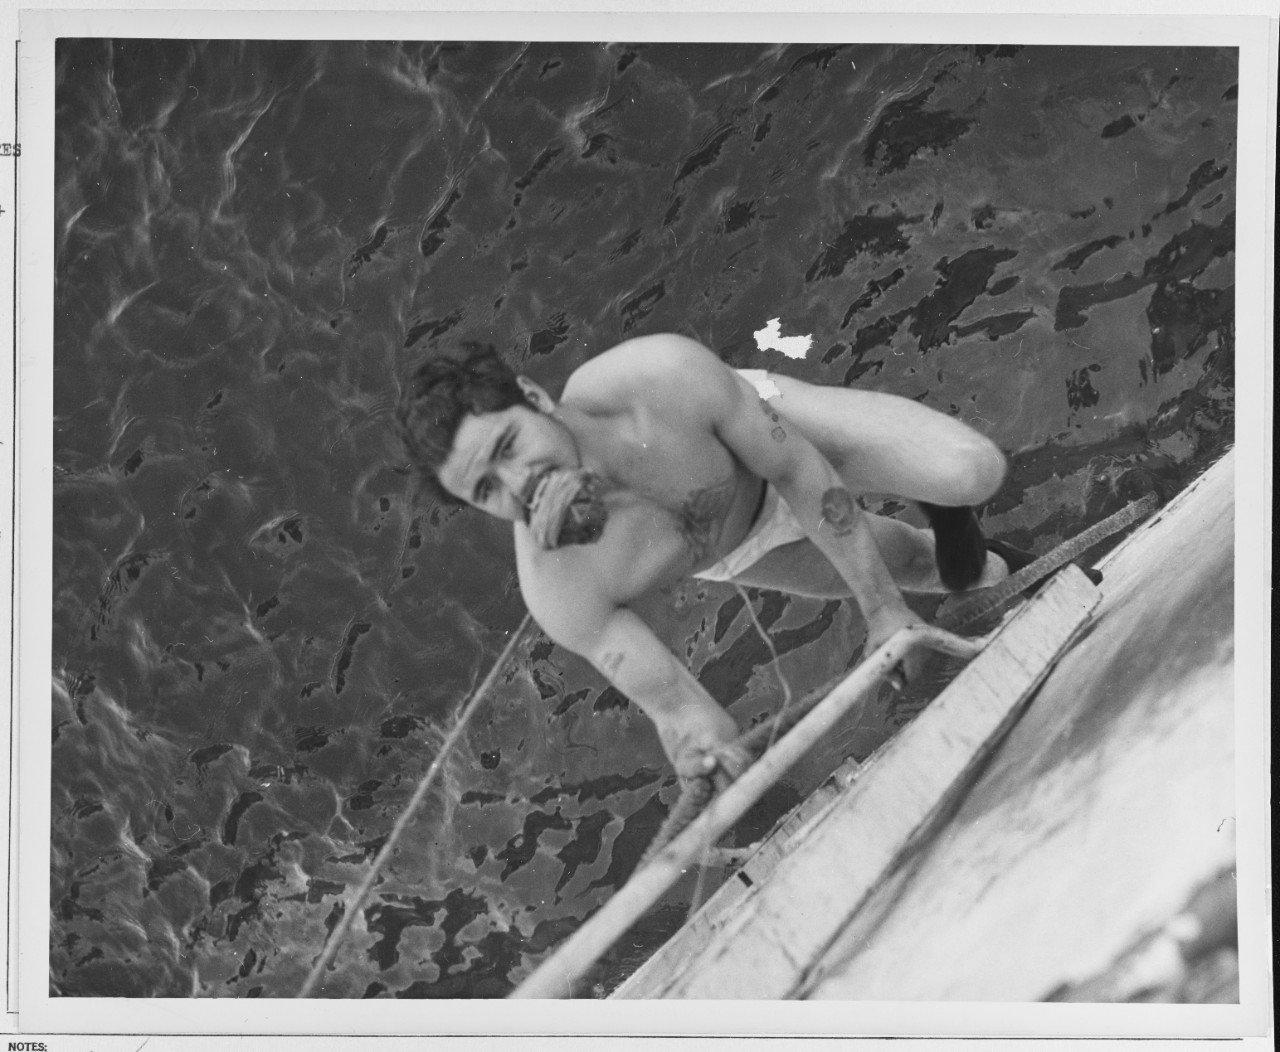 Colon Swindell, fireman 1/c, of Wanchese North Carolina, daring swim.